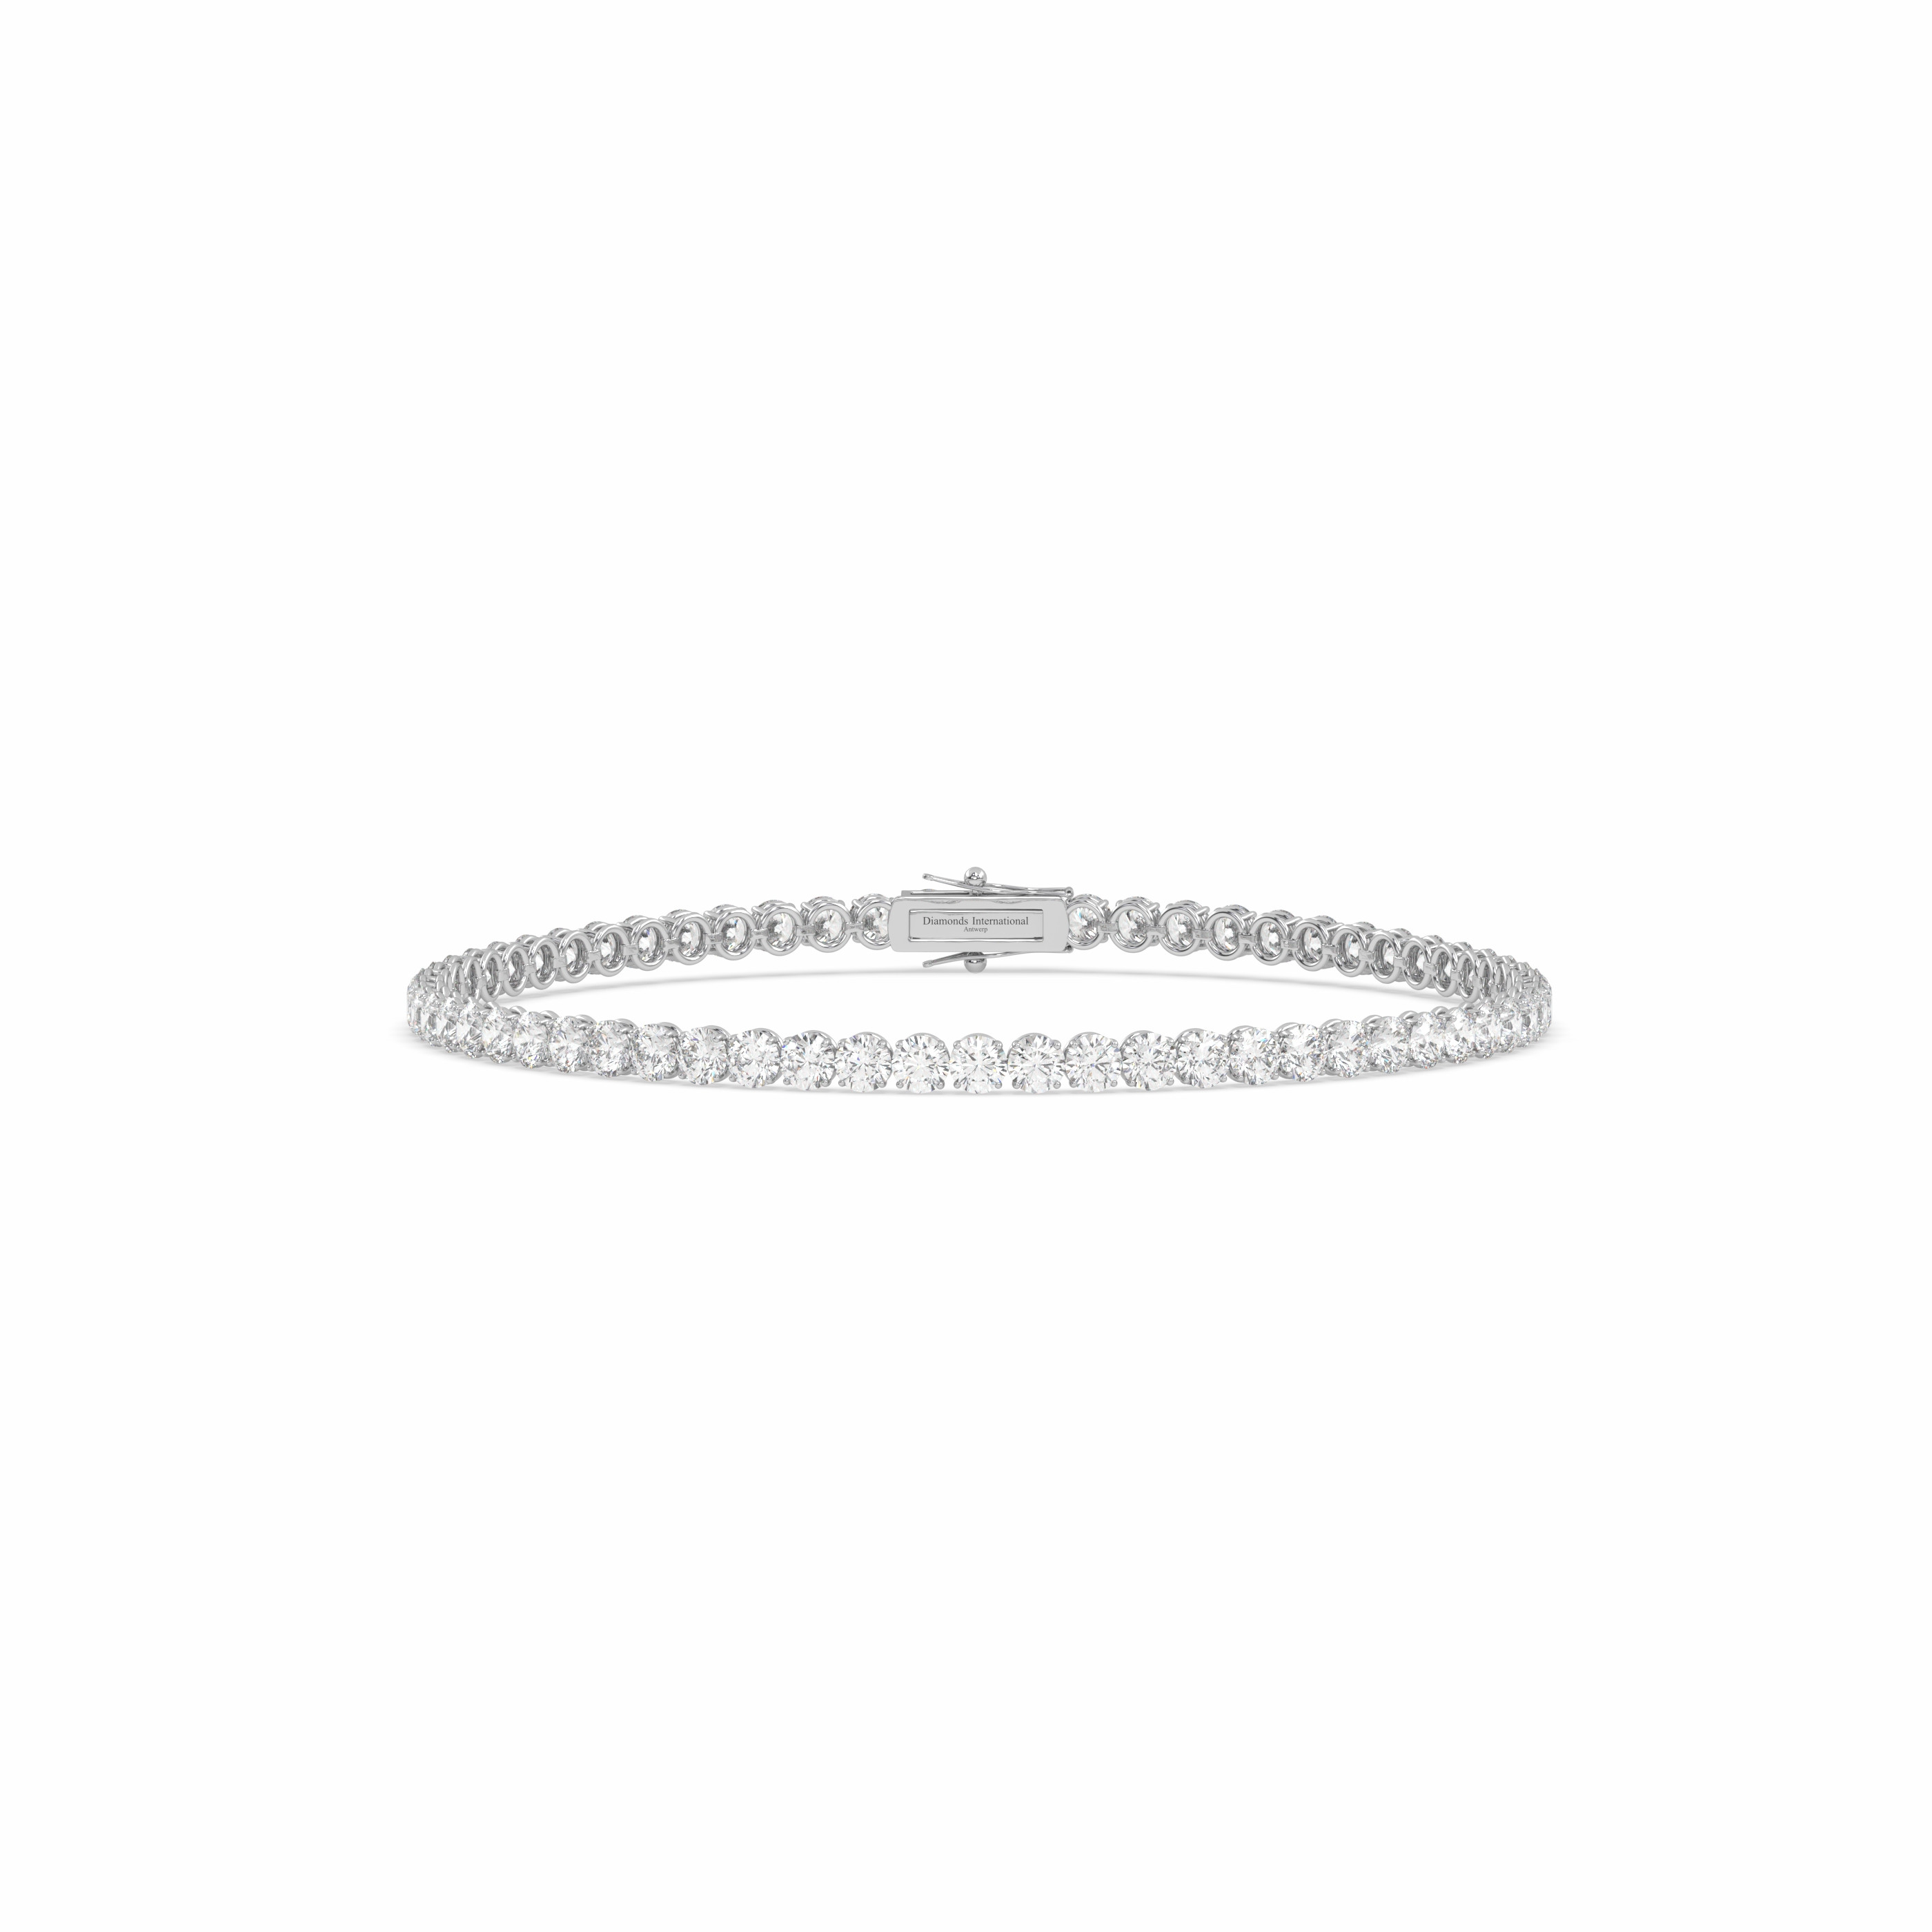 18k white gold 4.0 carat round cut diamond tennis bracelet Photos & images